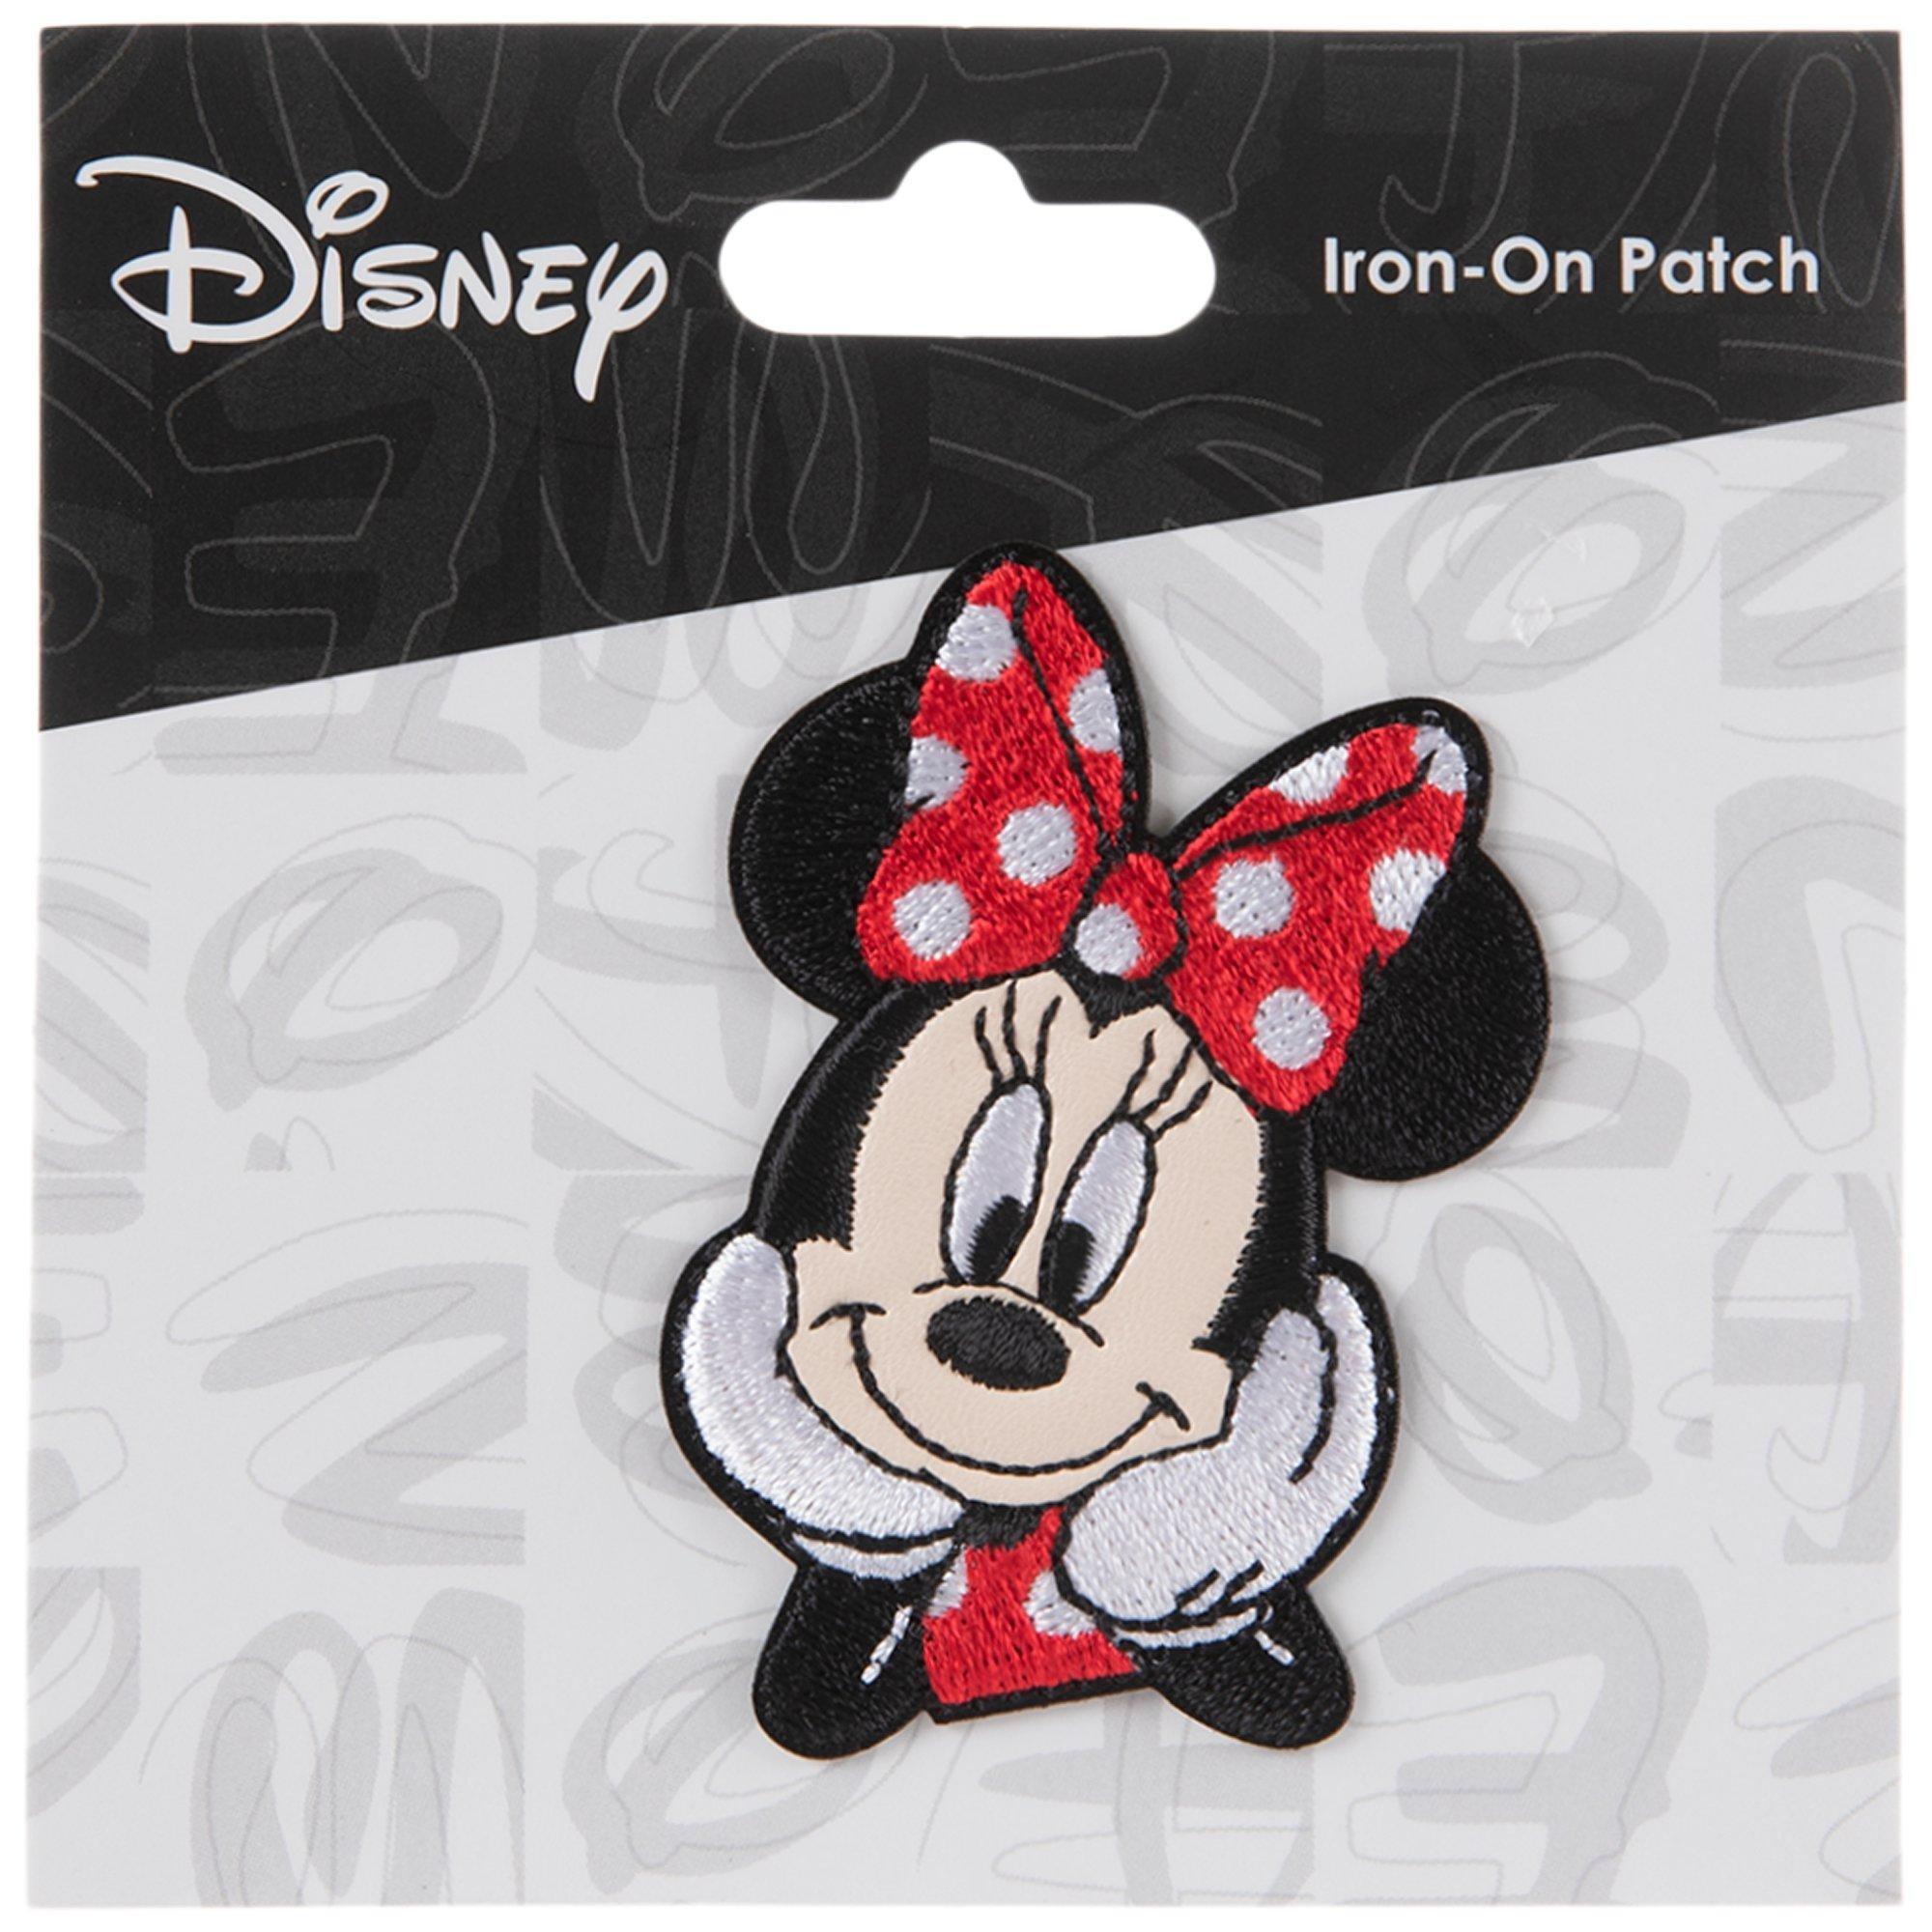 Disney Minnie Mouse Cotton Fabric Iron-On Patches Appliques Emblems